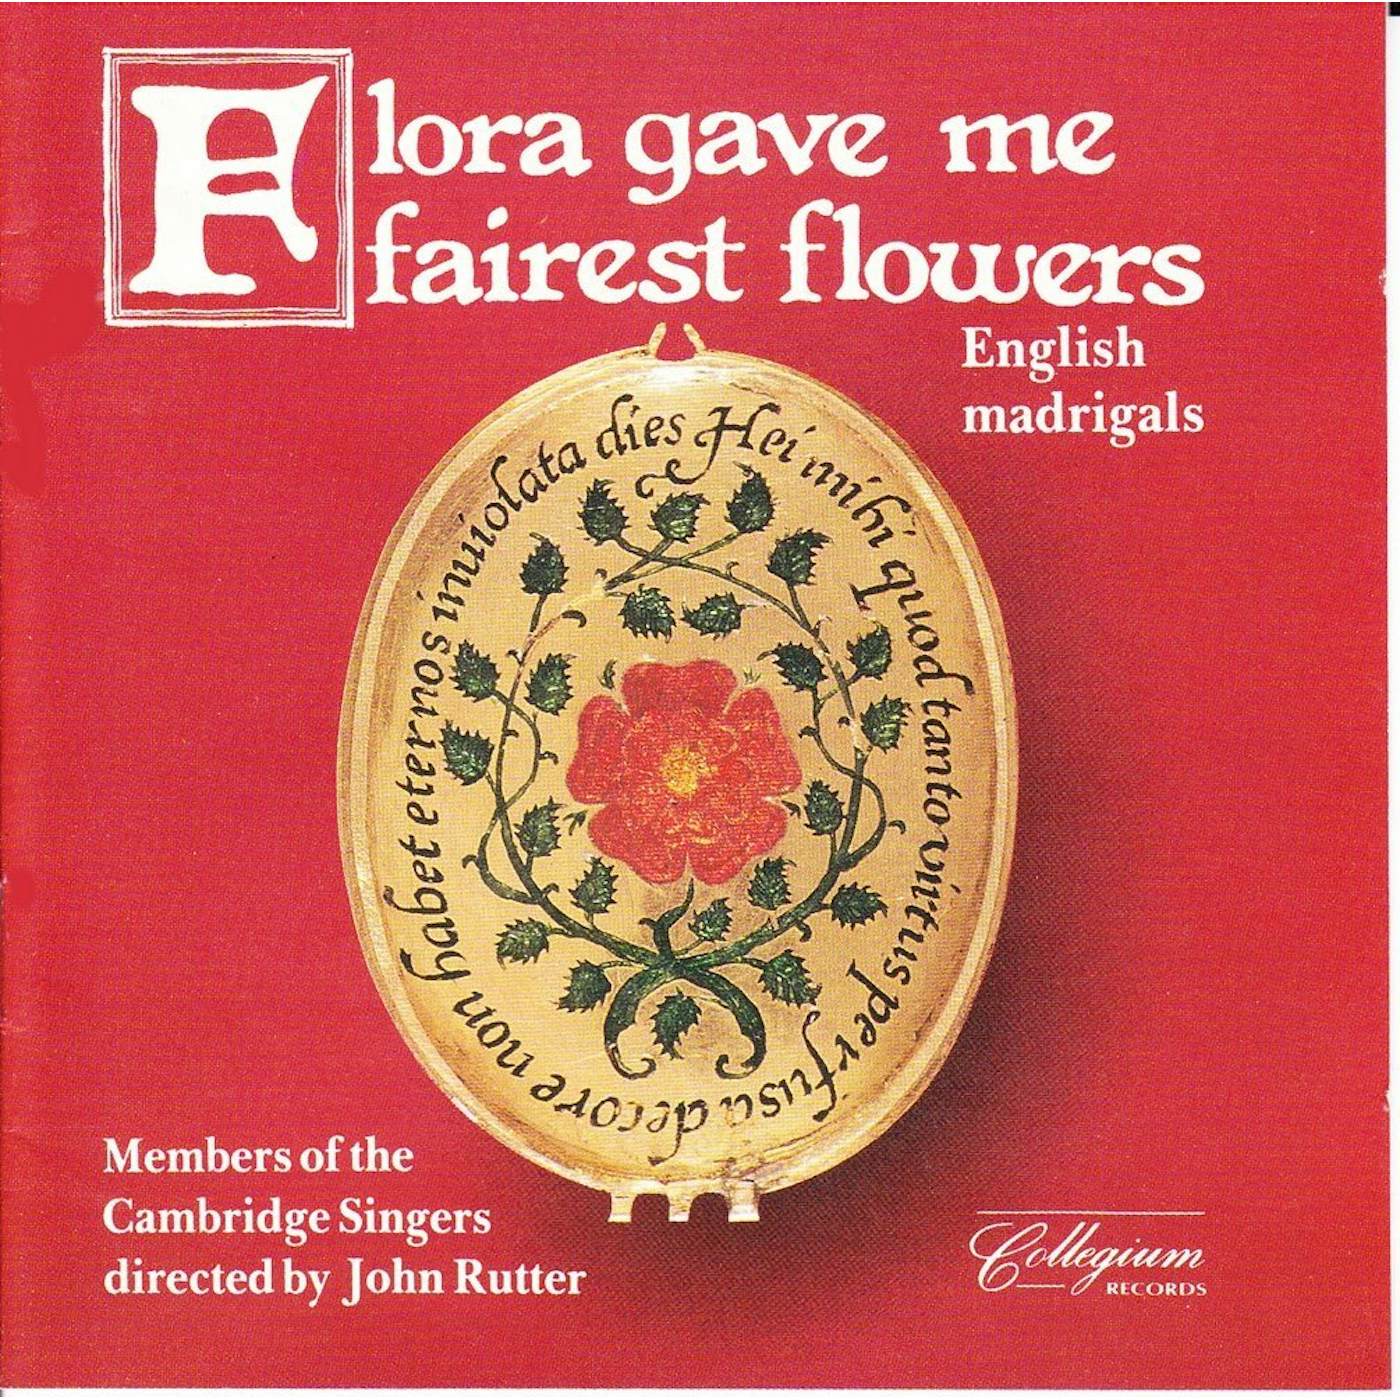 CAMBRIDGE SINGERS (MEMBERS OF) FLORA GAVE ME FAIREST FLOWERS: ENGLISH MADRIGALS Vinyl Record